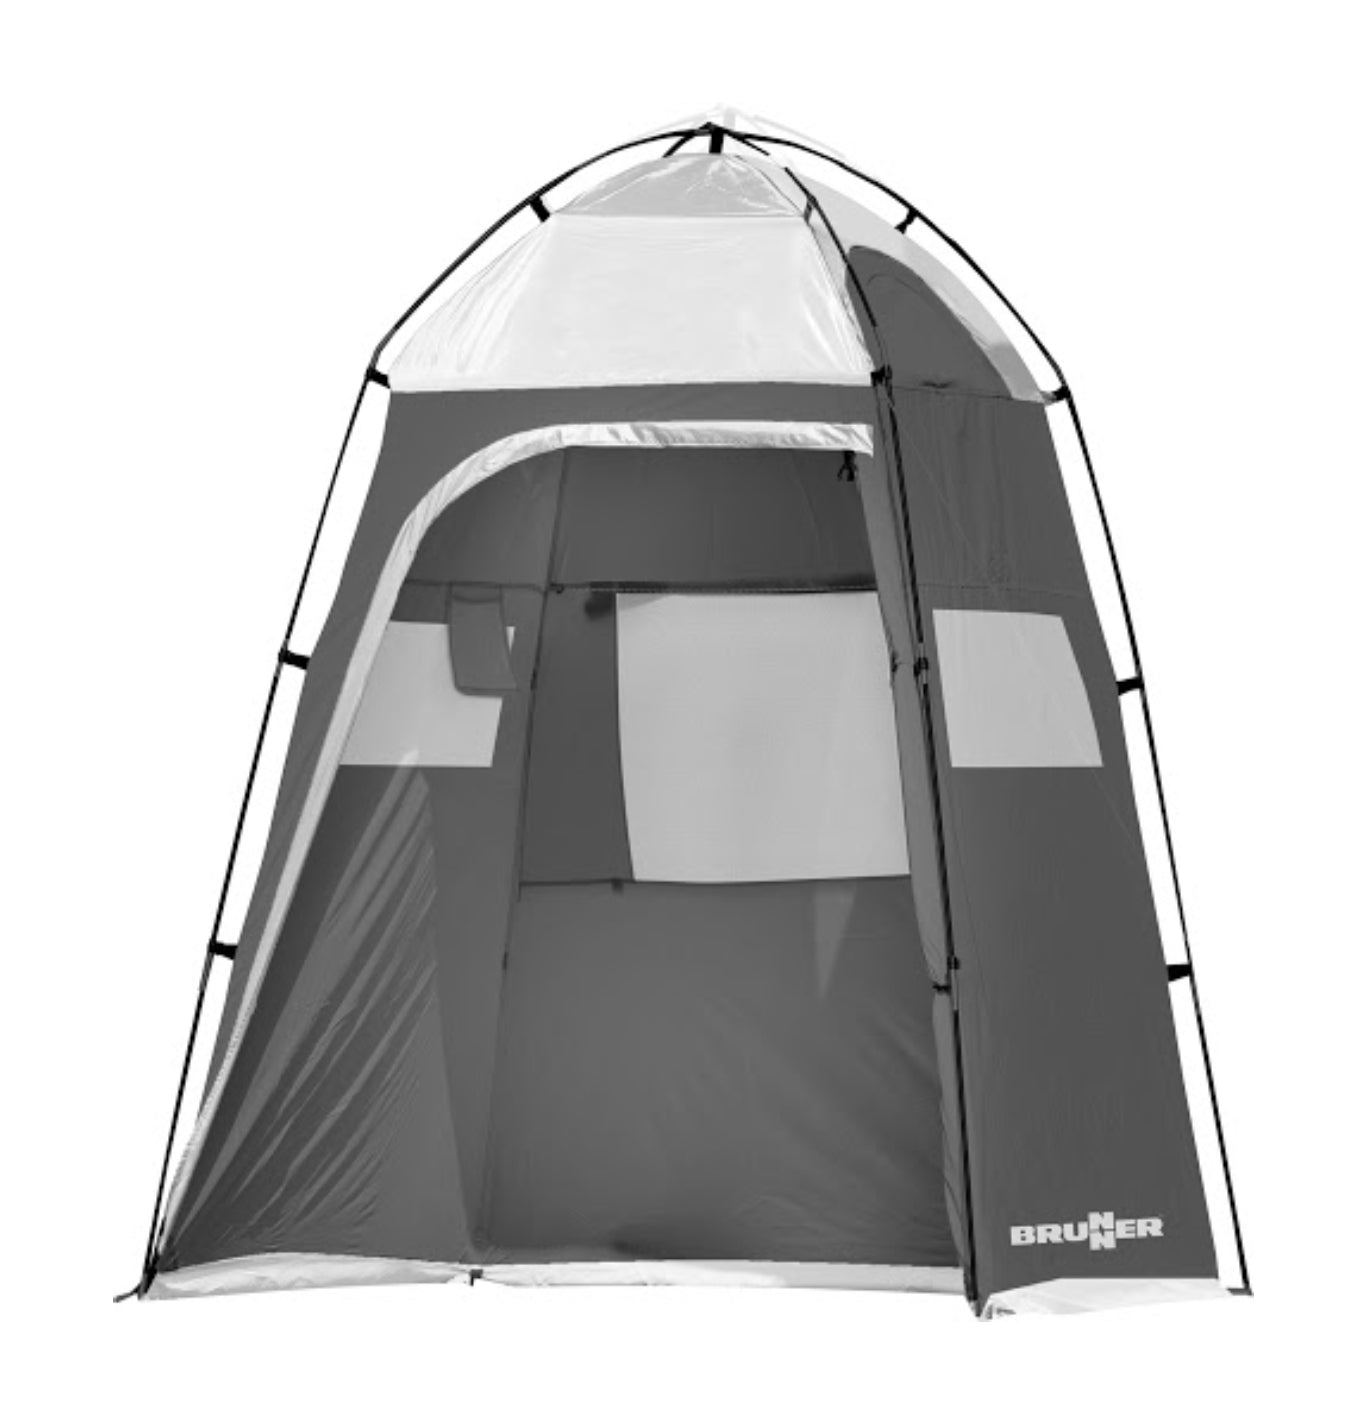 Brunner Cabina II NG Multifunctional Storage & Shelter Tent Image